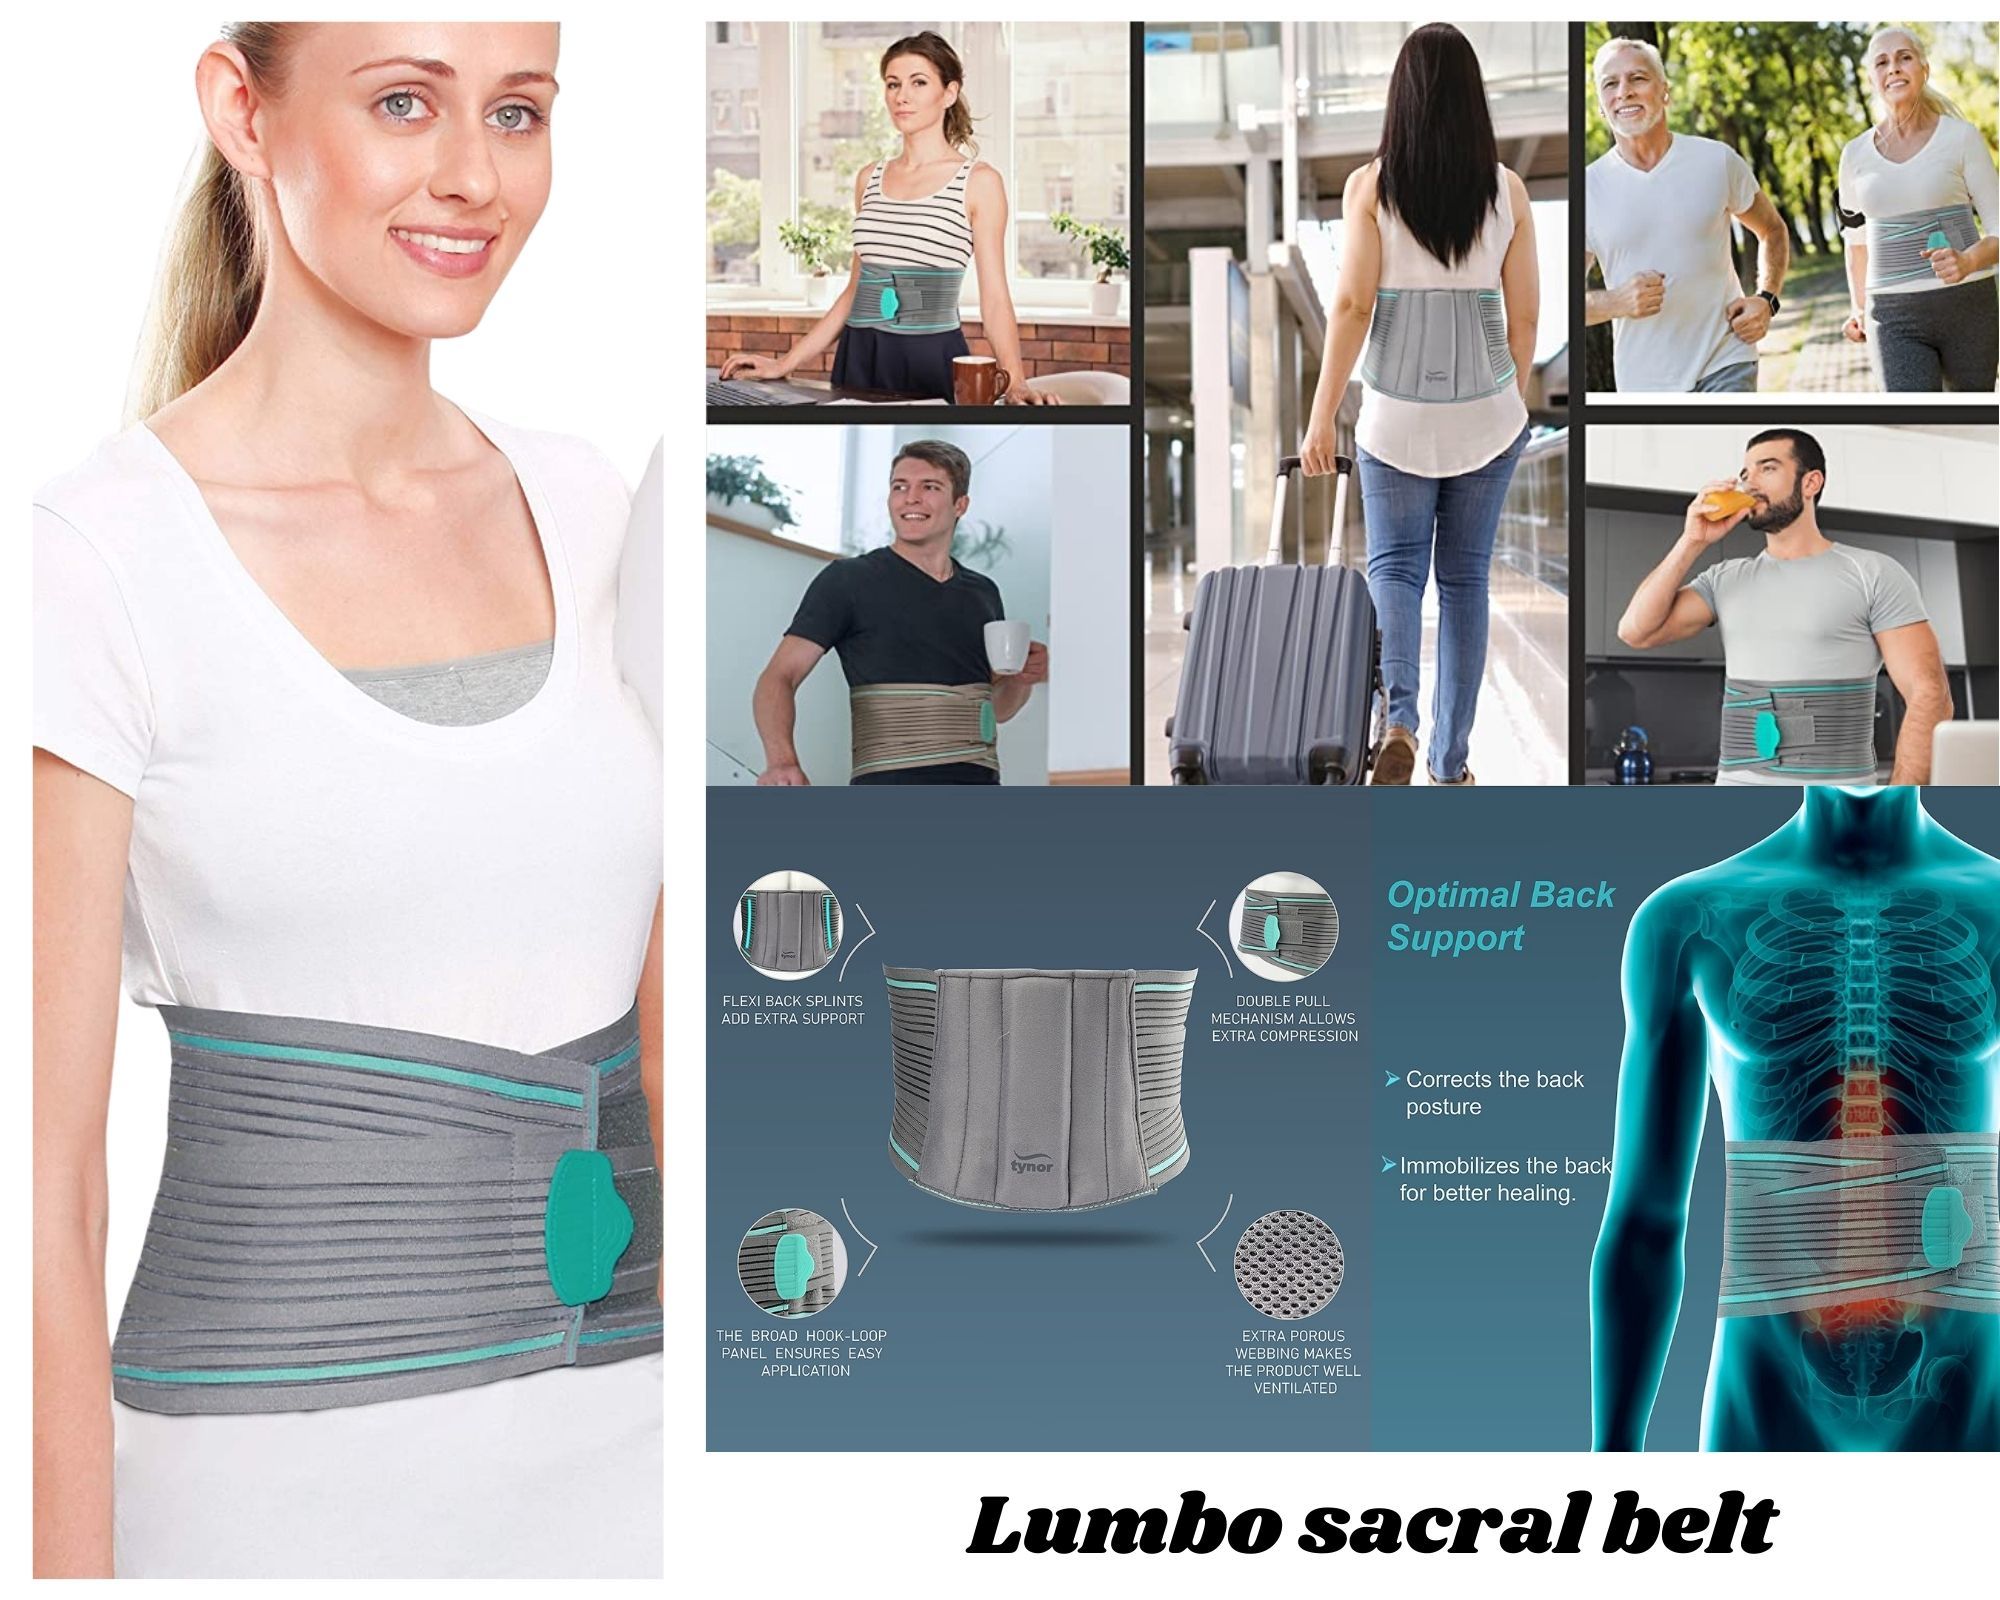 Lumbo sacral belt